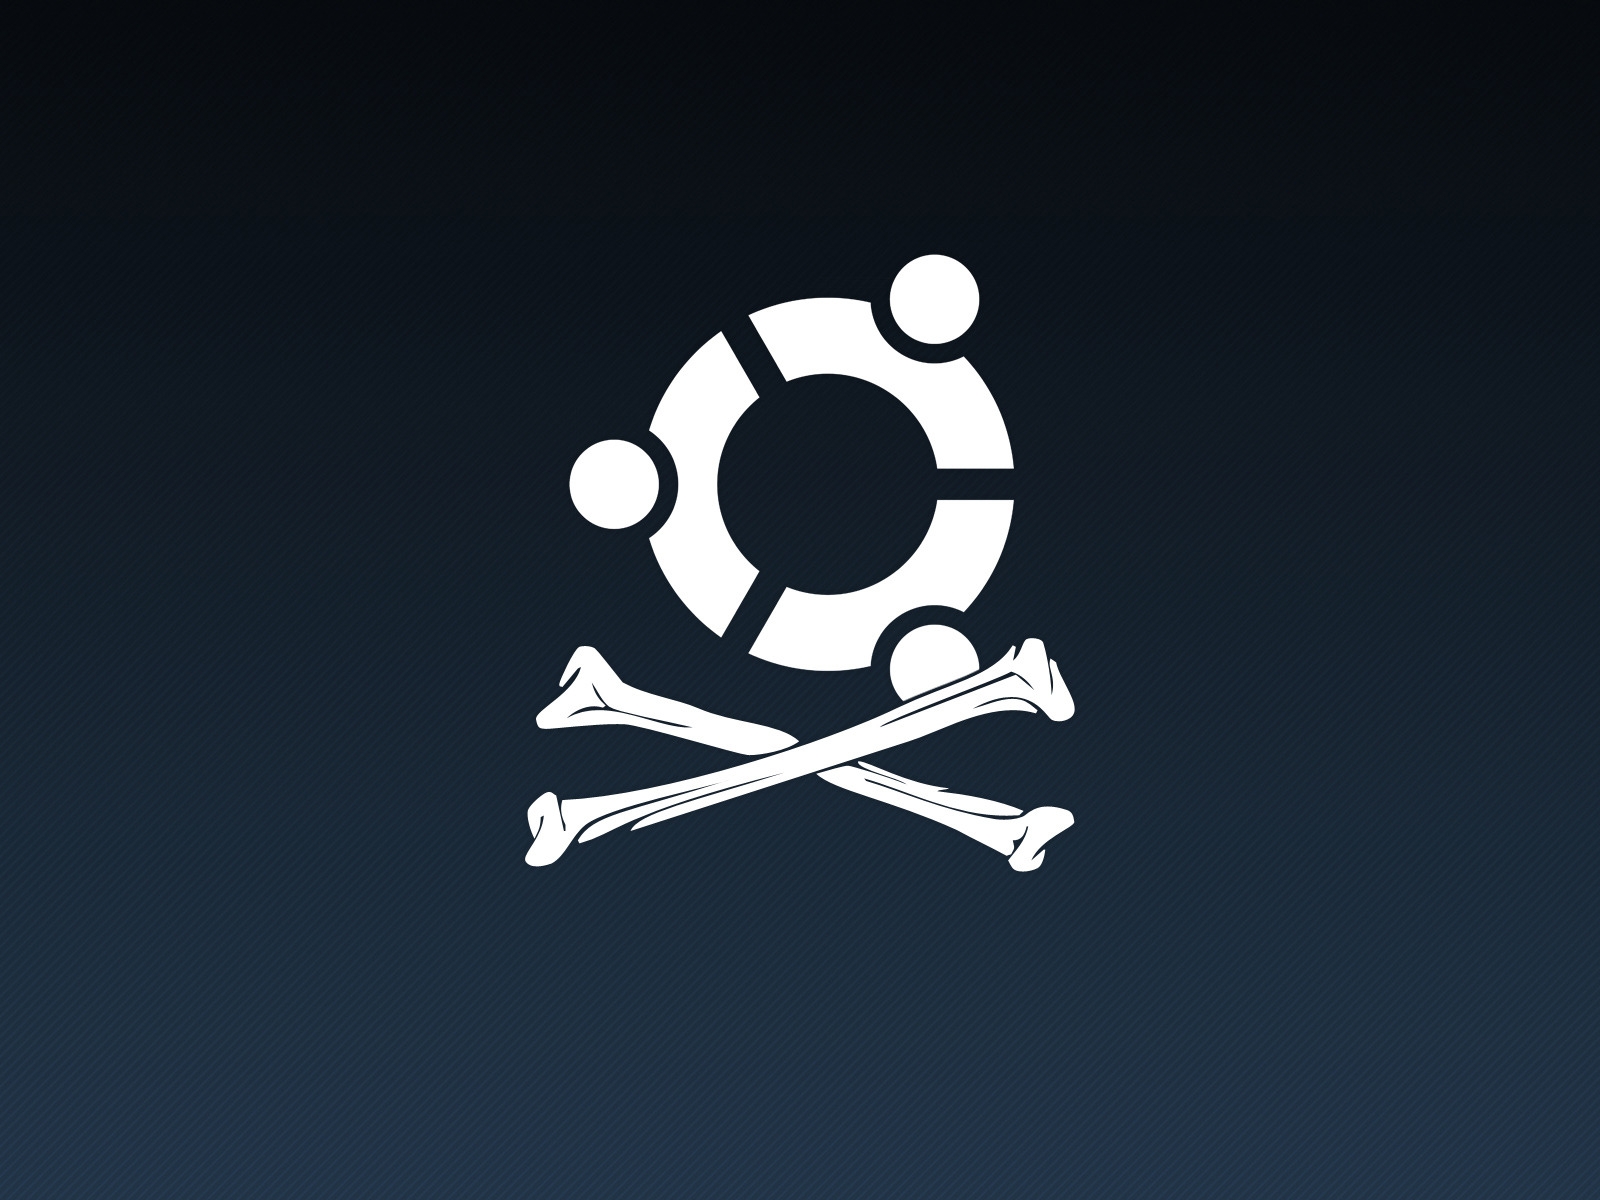 Pirate Ubuntu for 1600 x 1200 resolution